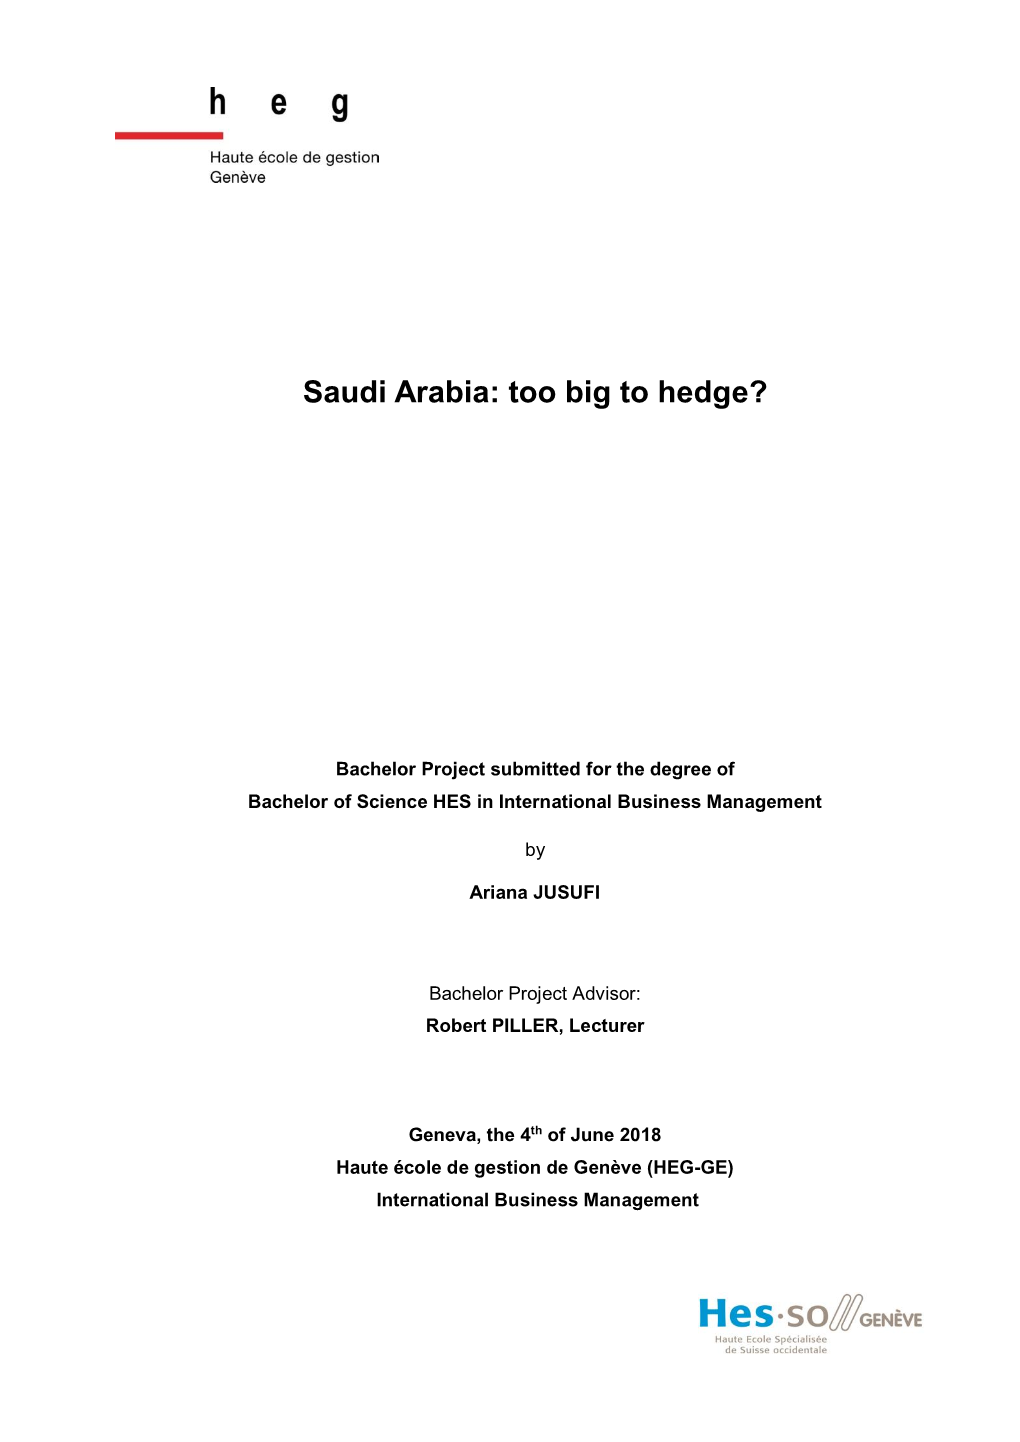 Saudi Arabia: Too Big to Hedge?